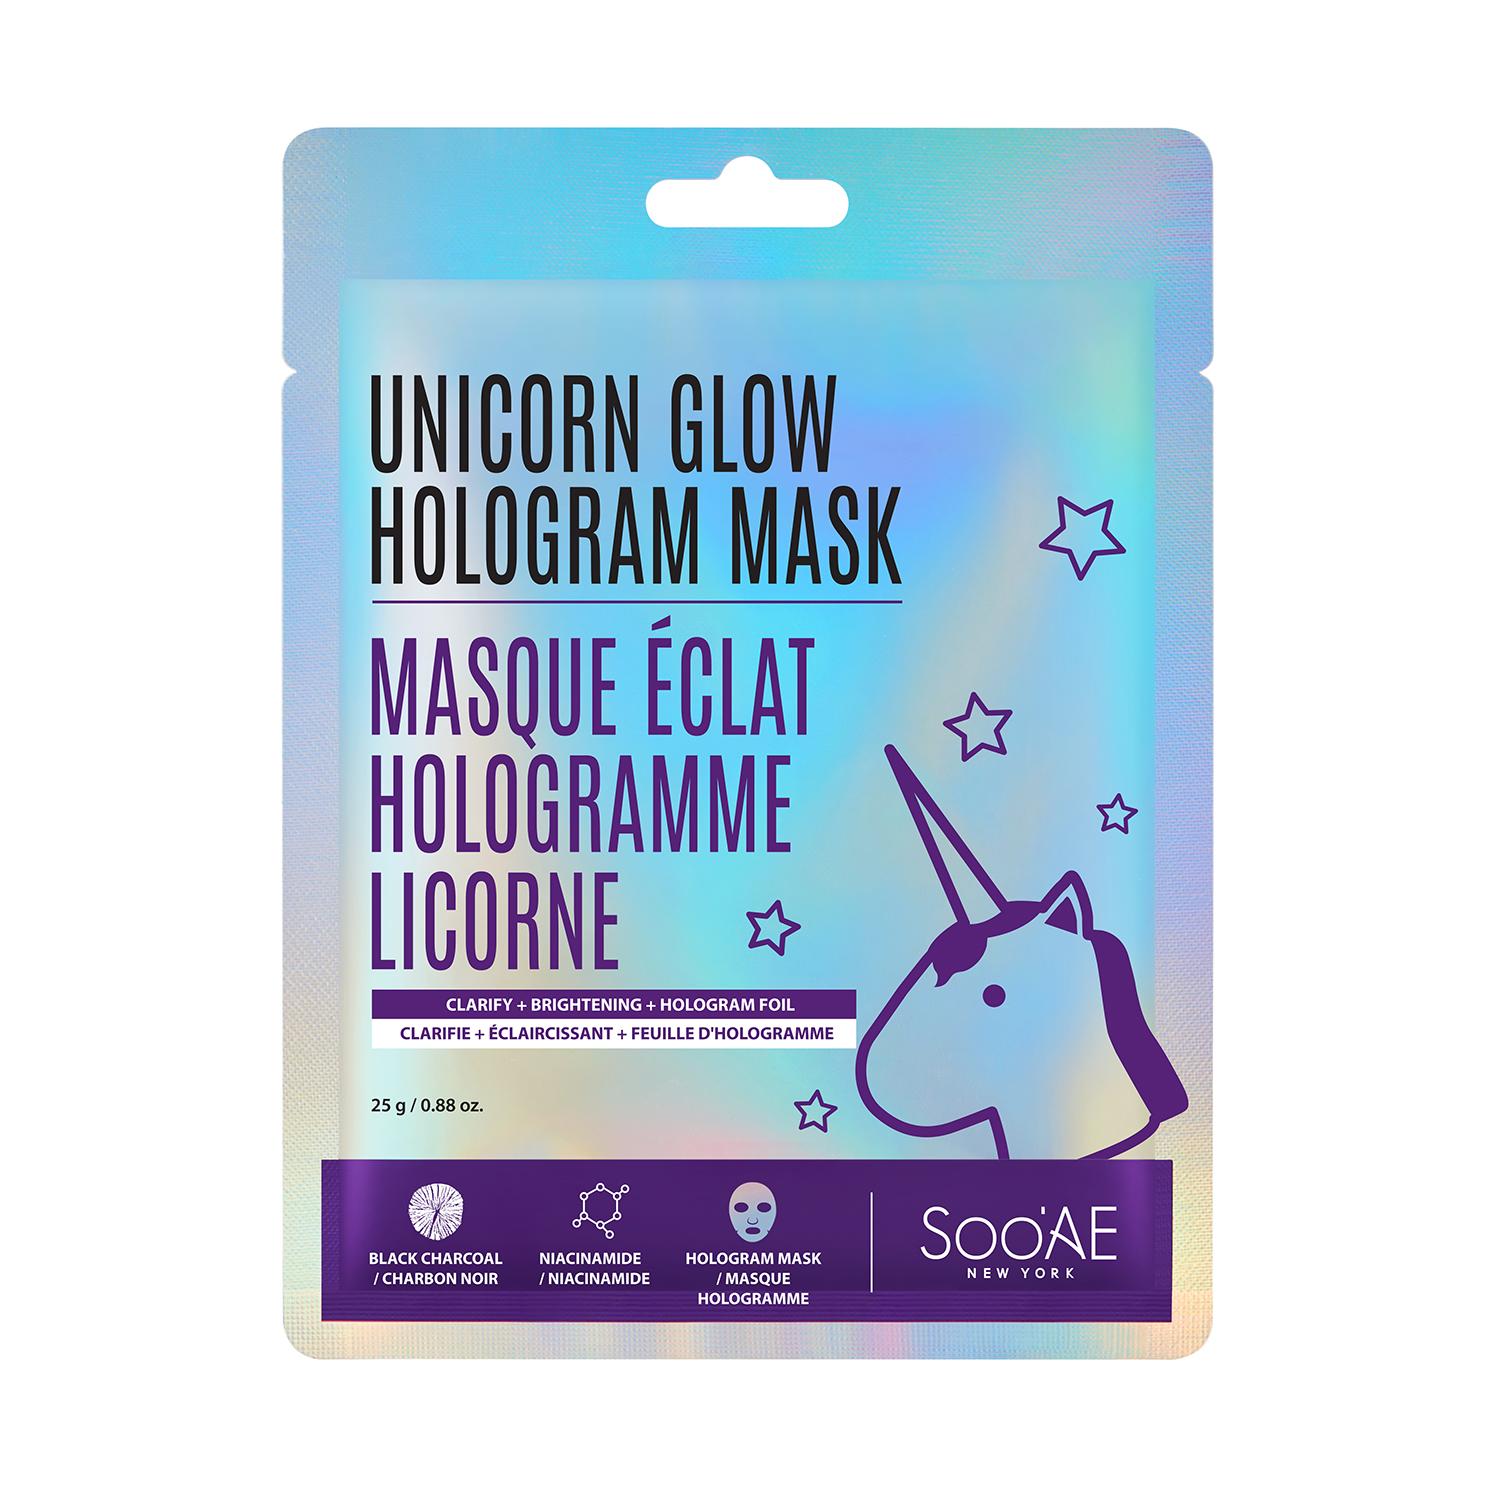 Unicorn Glow Holographic Mask